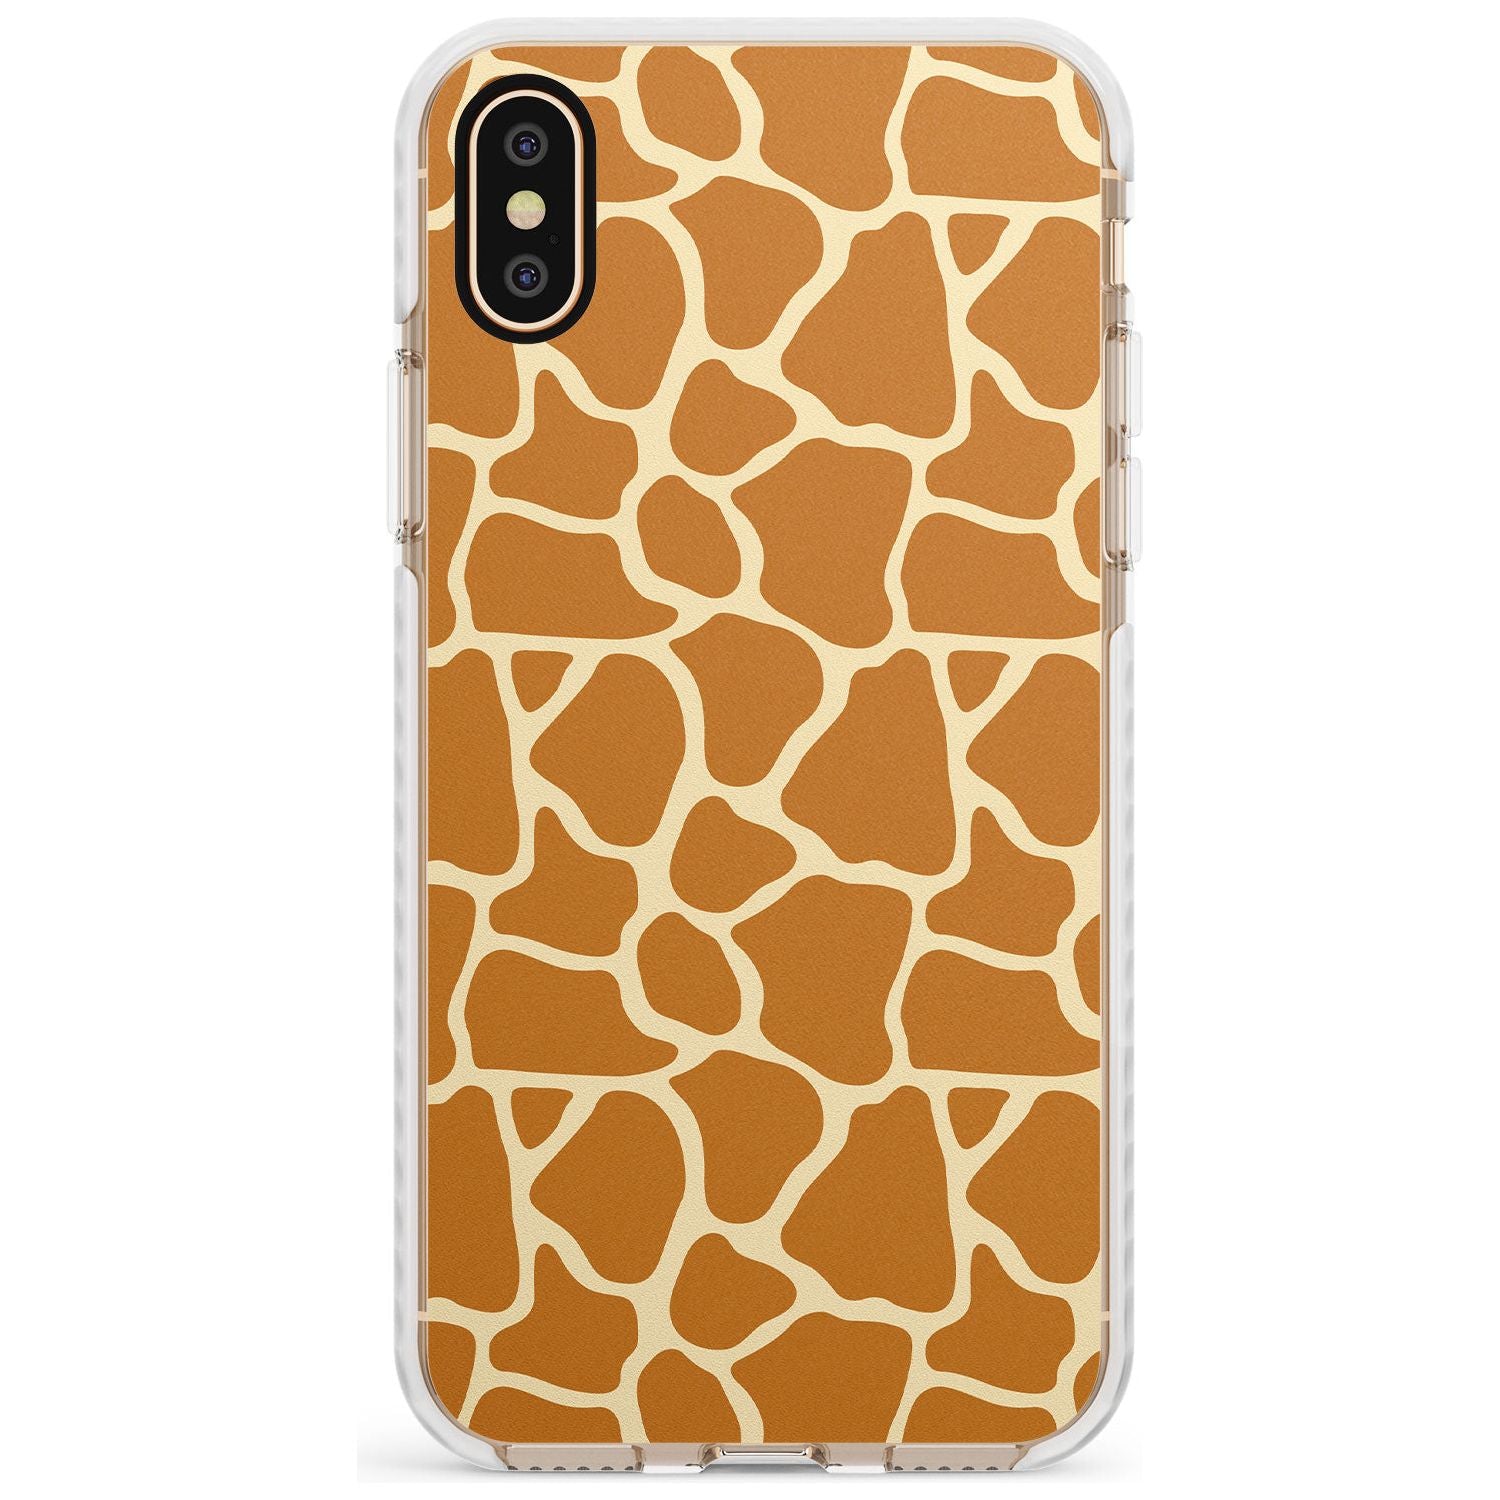 Giraffe Pattern Impact Phone Case for iPhone X XS Max XR